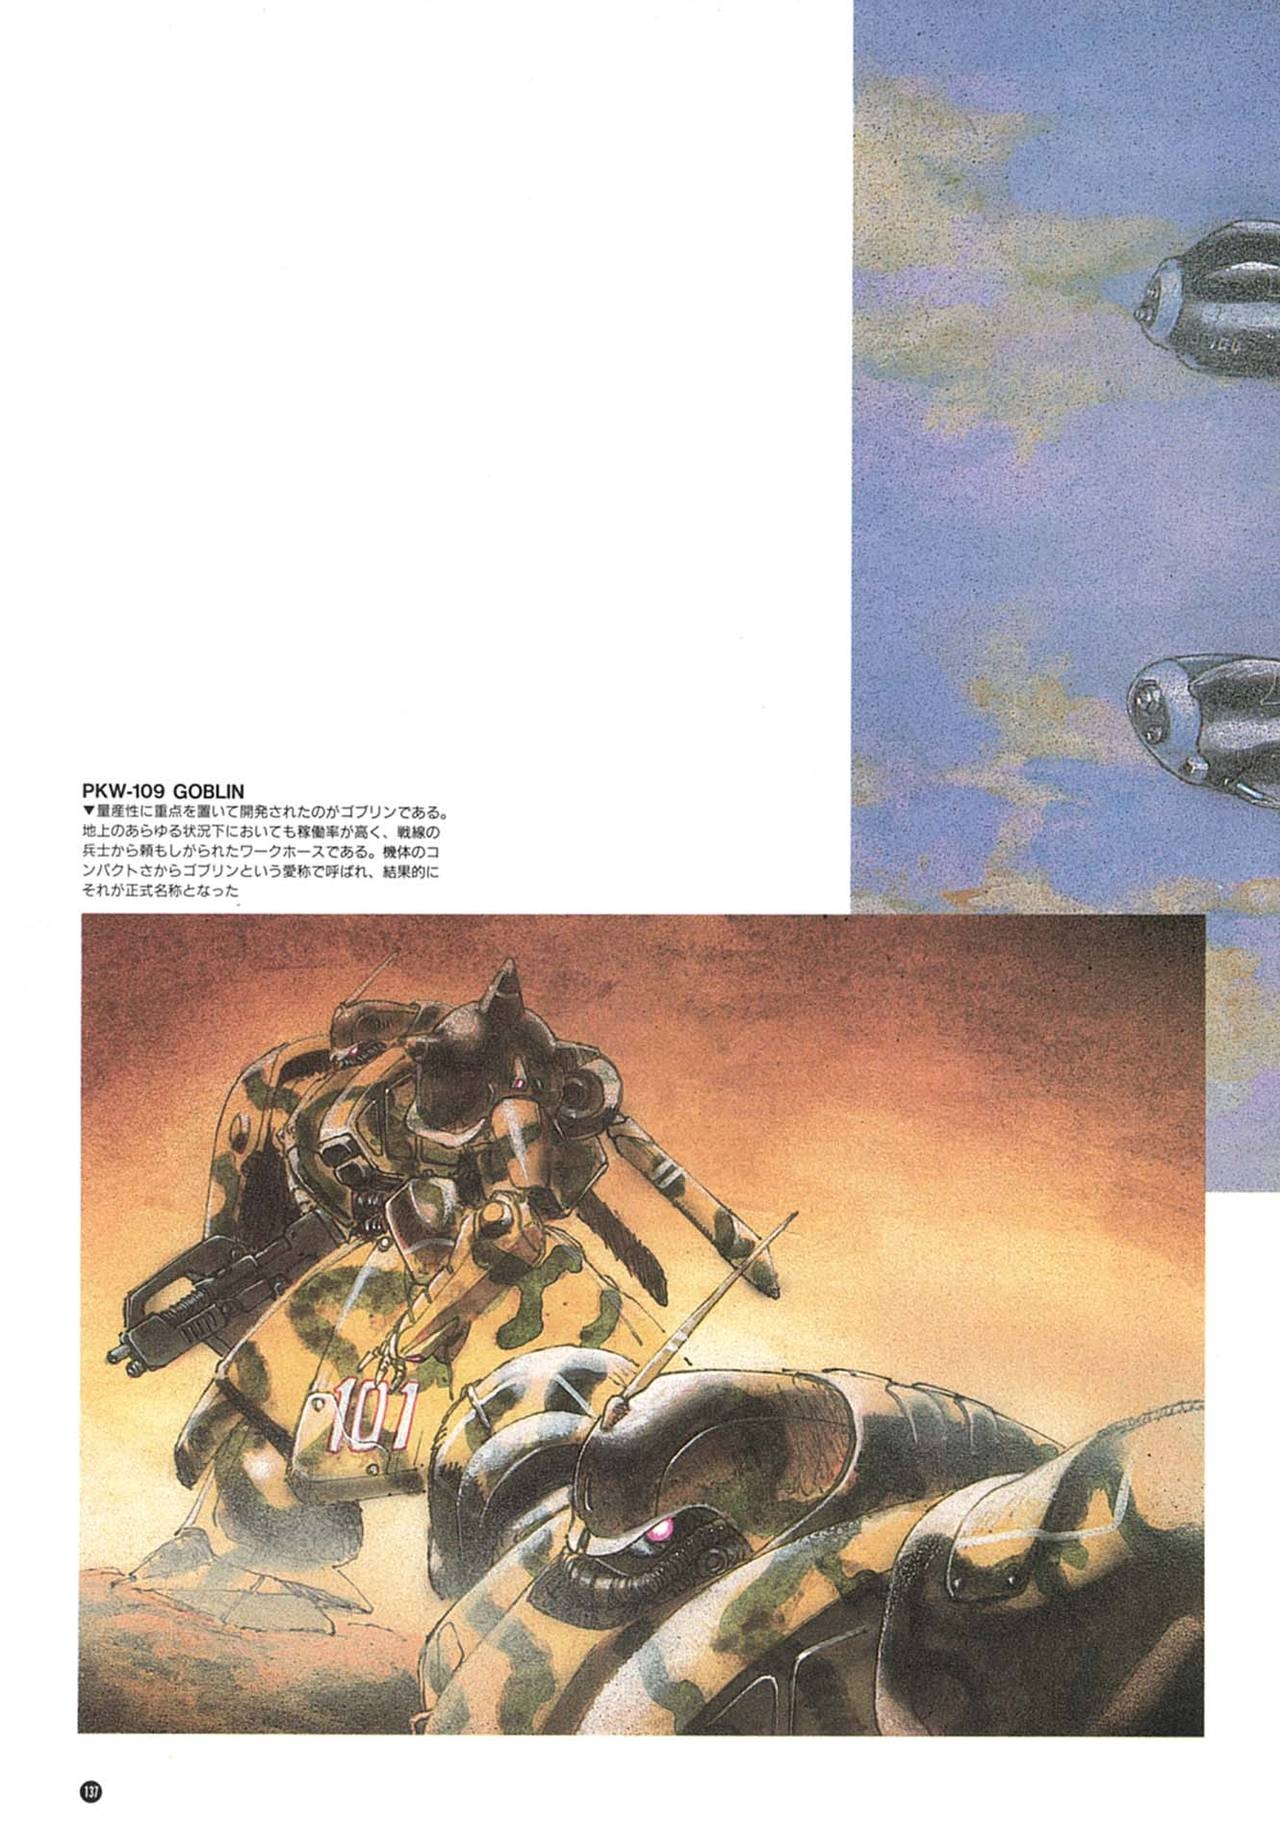 [Kazuhisa Kondo] Kazuhisa Kondo 2D & 3D Works - Go Ahead - From Mobile Suit Gundam to Original Mechanism 136